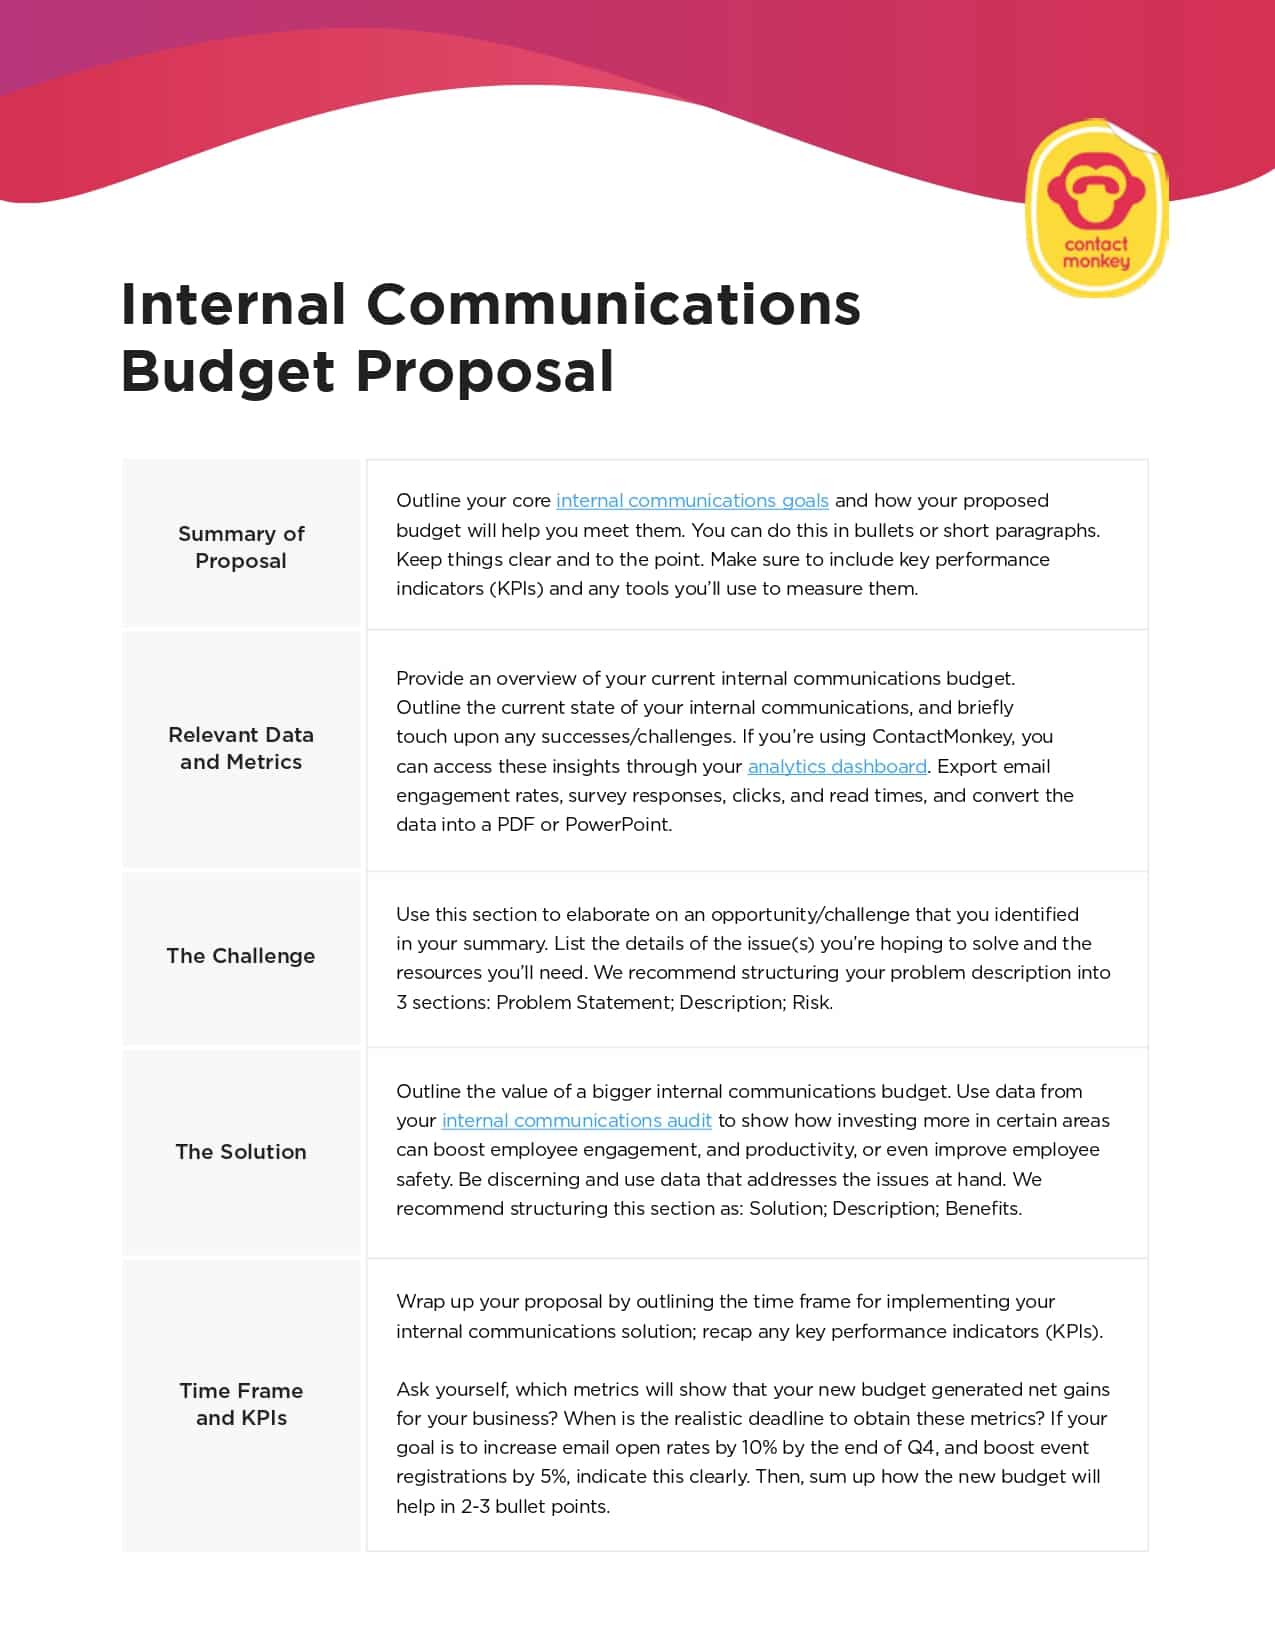 Internal Communications Budget Proposal Template